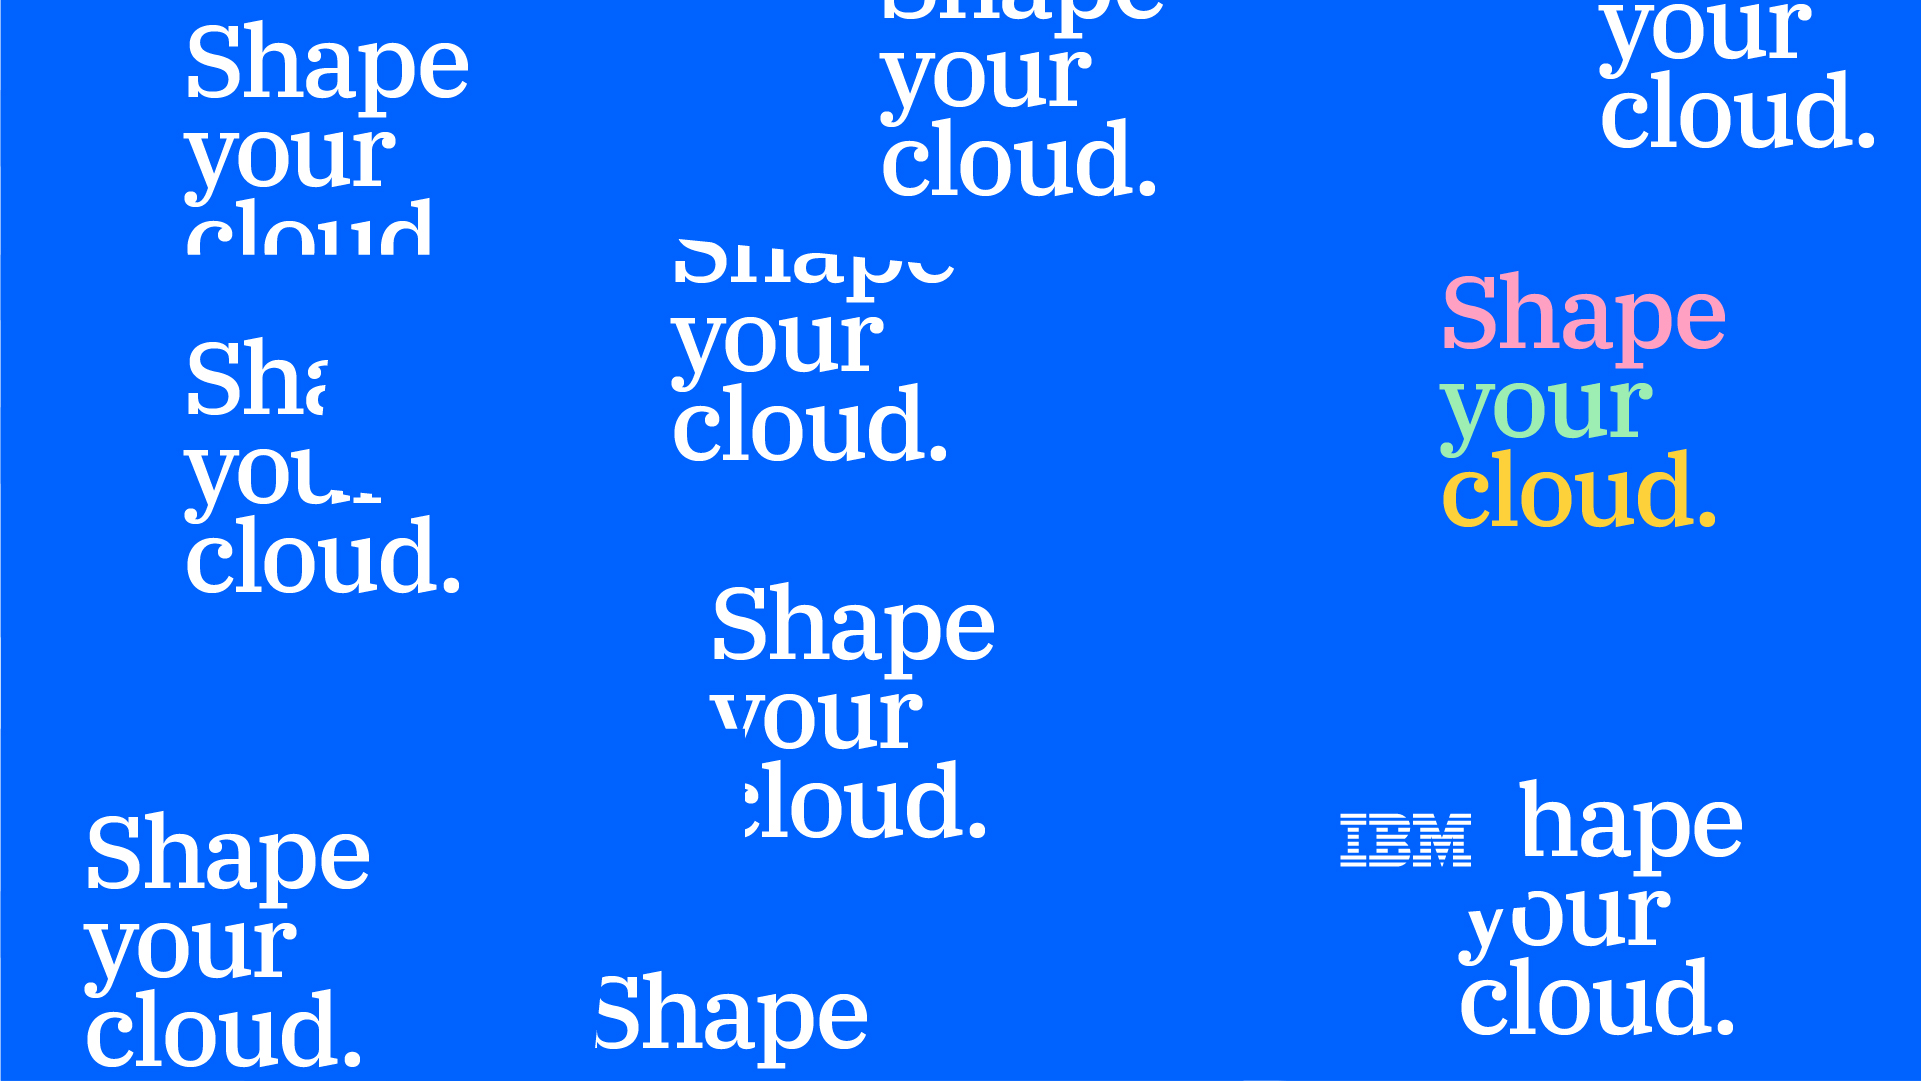 IBM_SHAPE-YOUR-CLOUD_DC_EDITS_BH_proceso_IBM-process-23